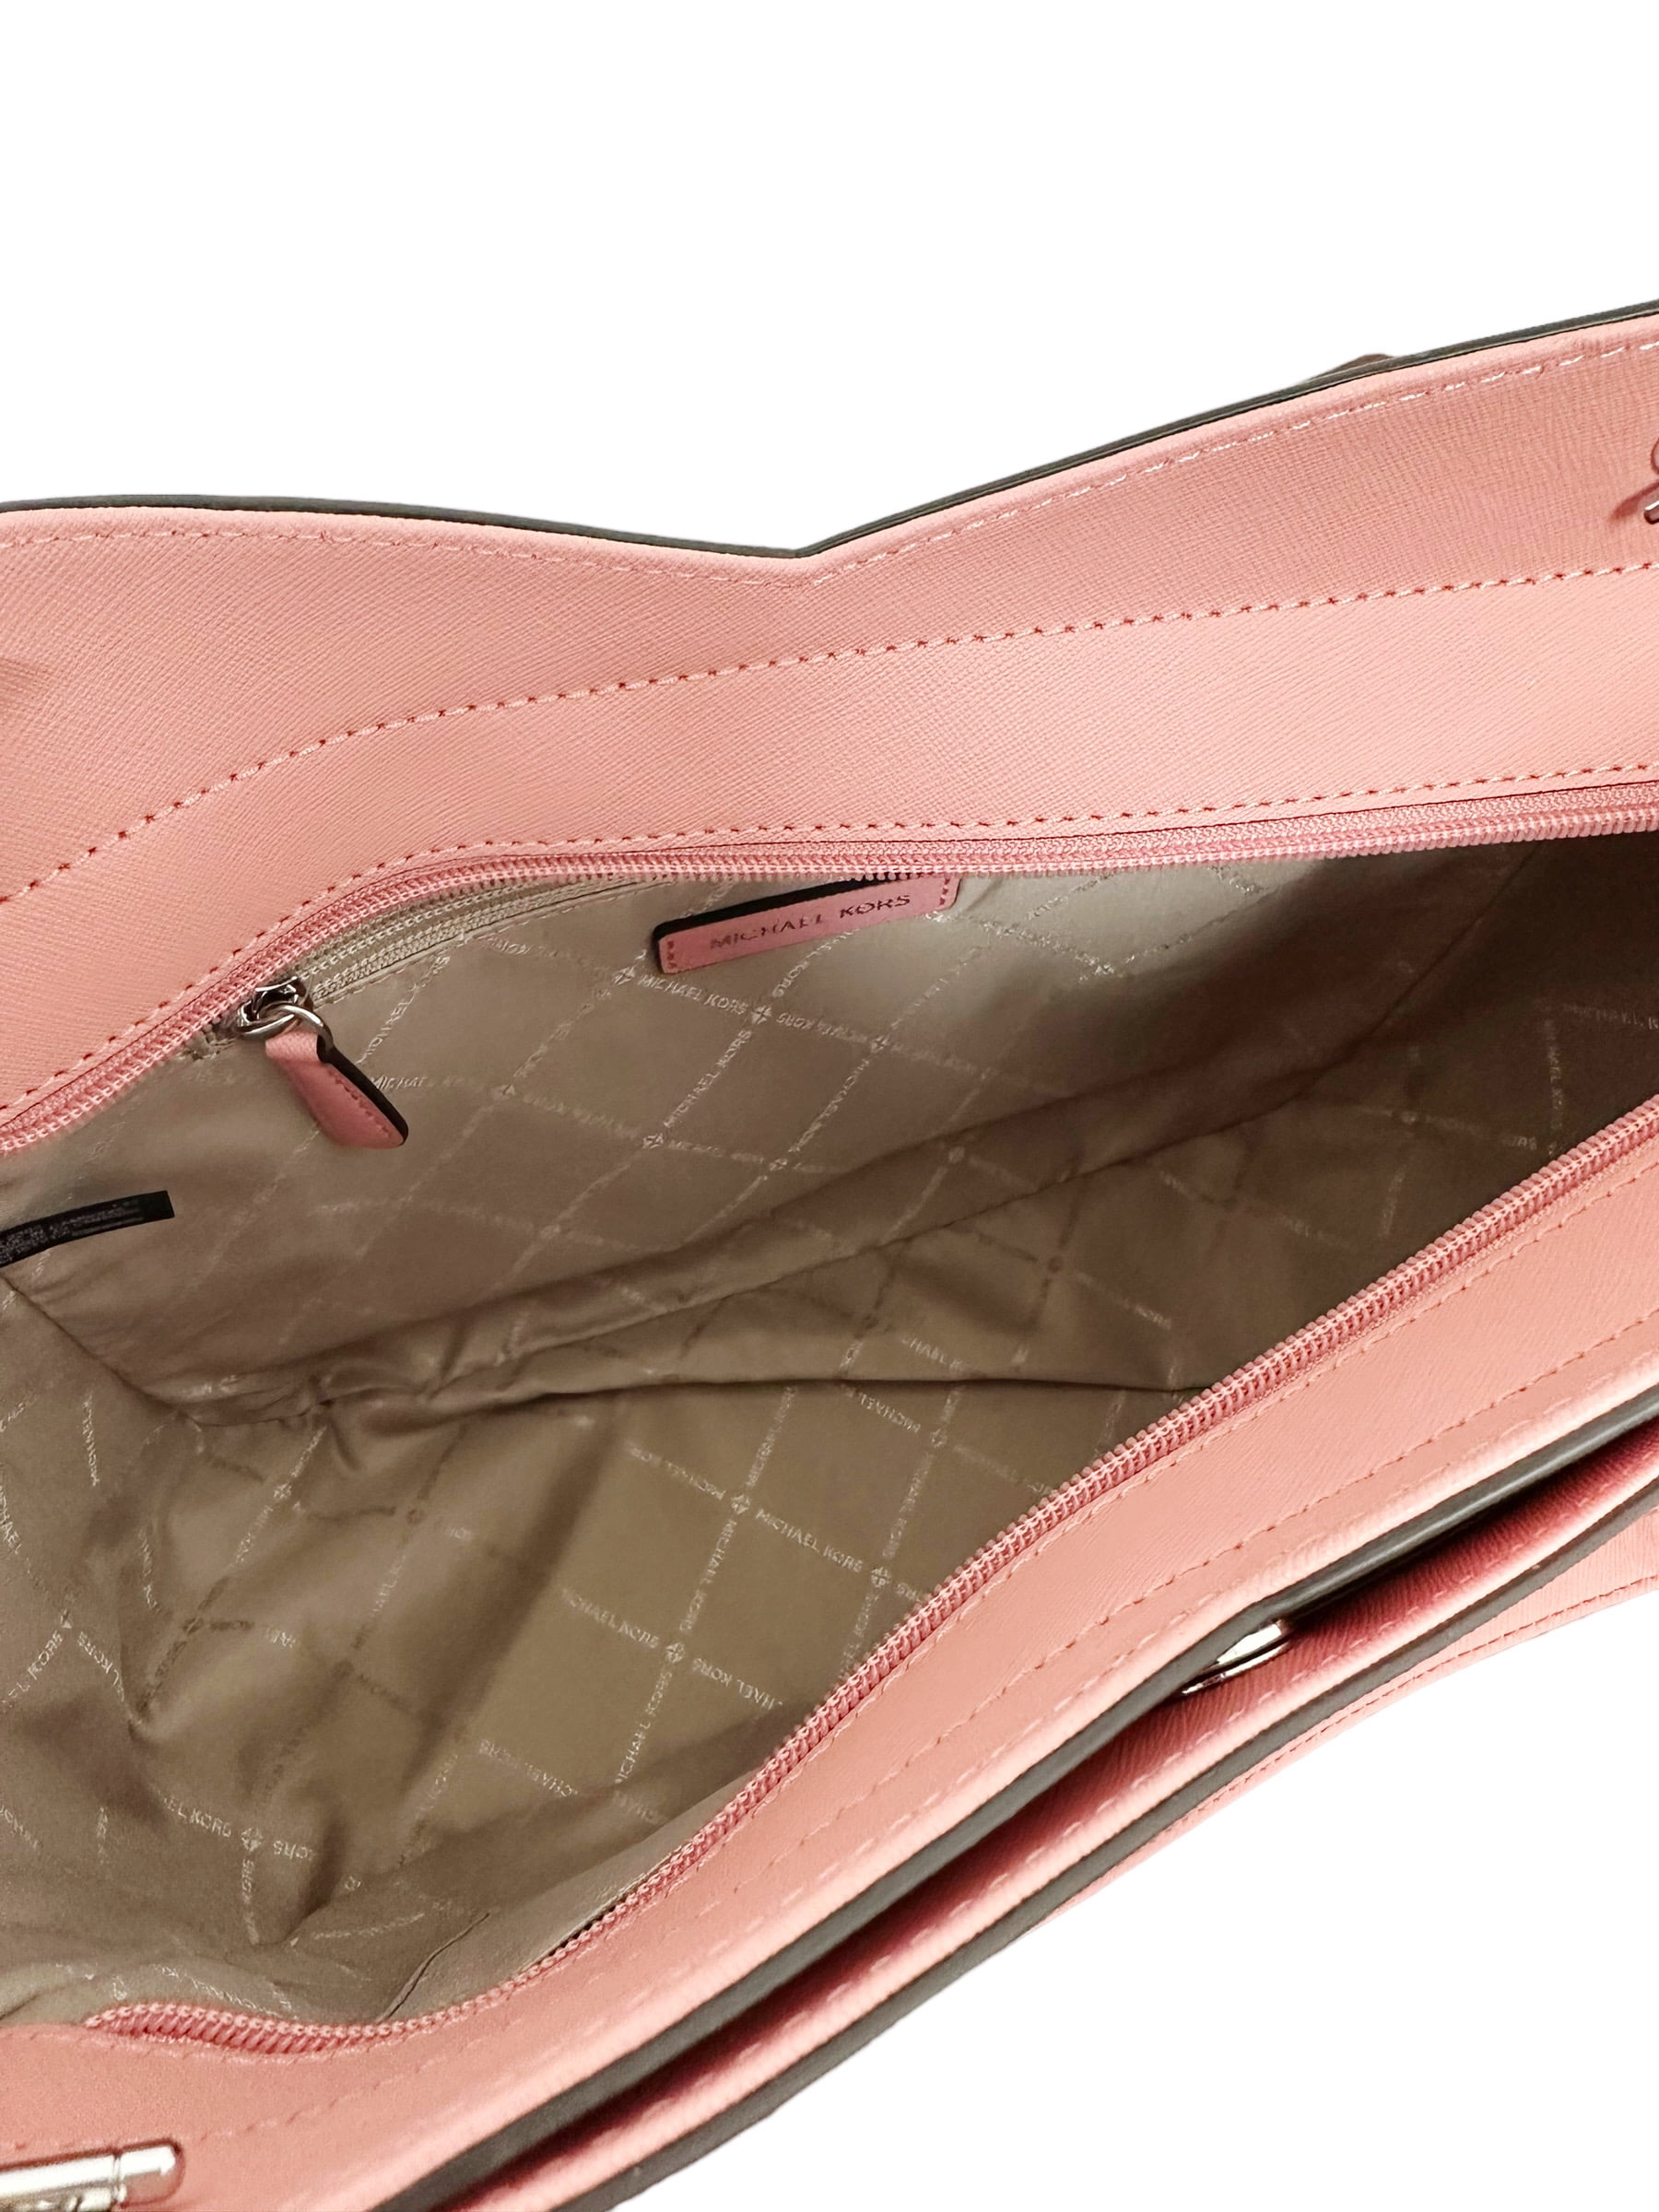 Michael Kors Jet Set Large French pink X Cross Chain Shoulder Tote Handbag  Women's Purse - ShopStyle